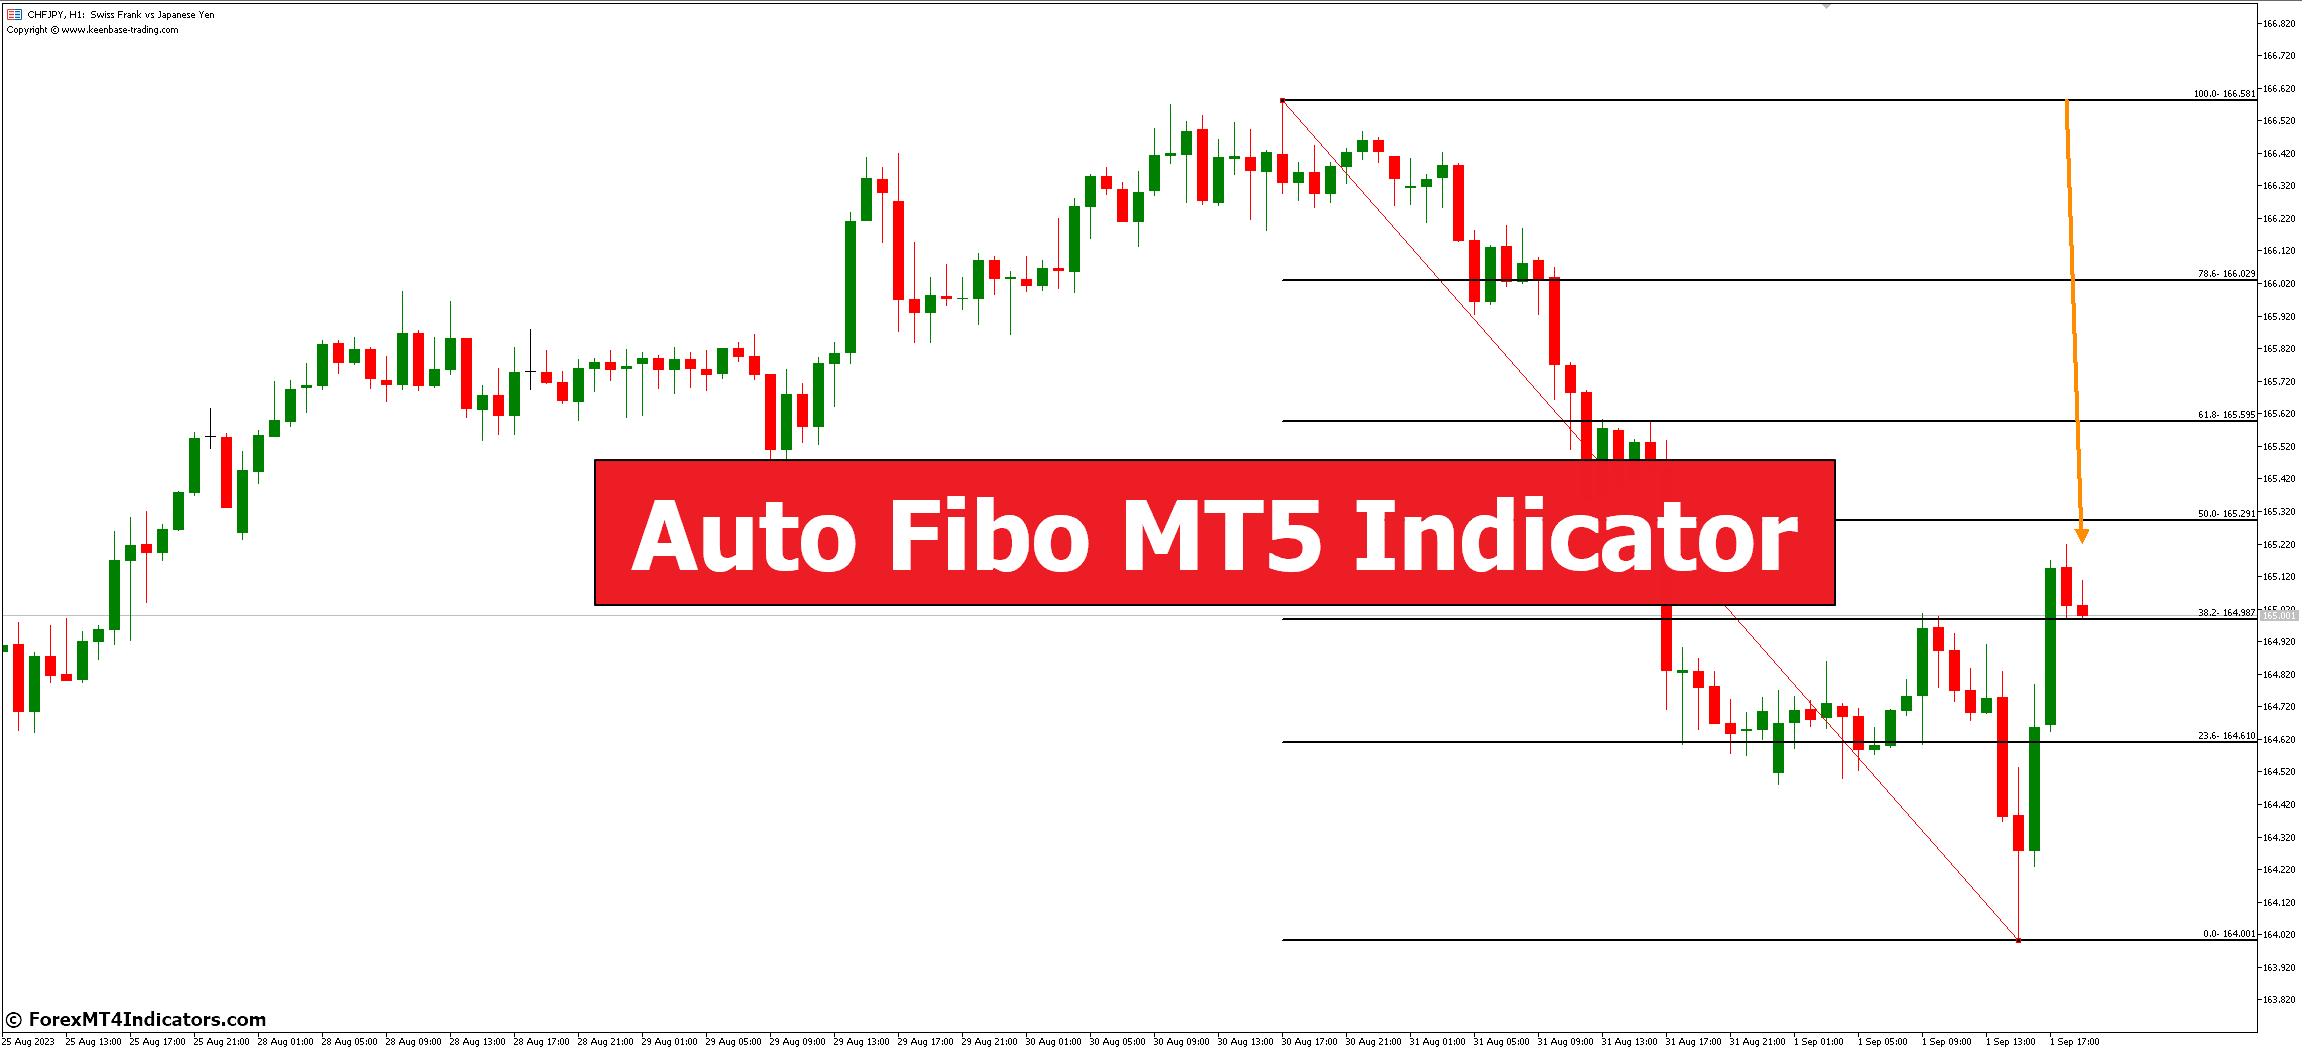 Auto Fibo MT5 Indicator